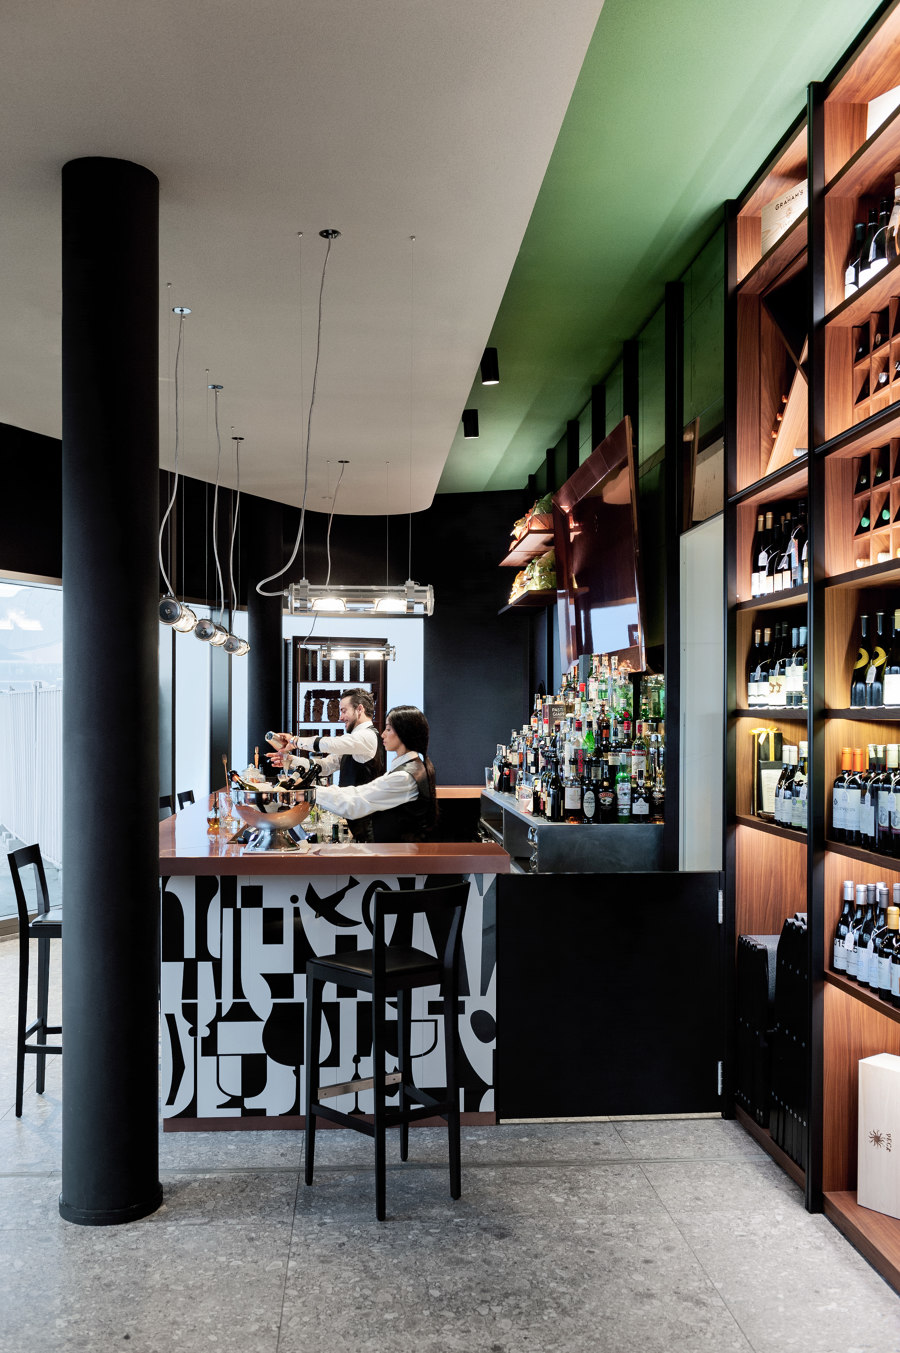 Peck CityLife by Vudafieri-Saverino Partners | Café interiors